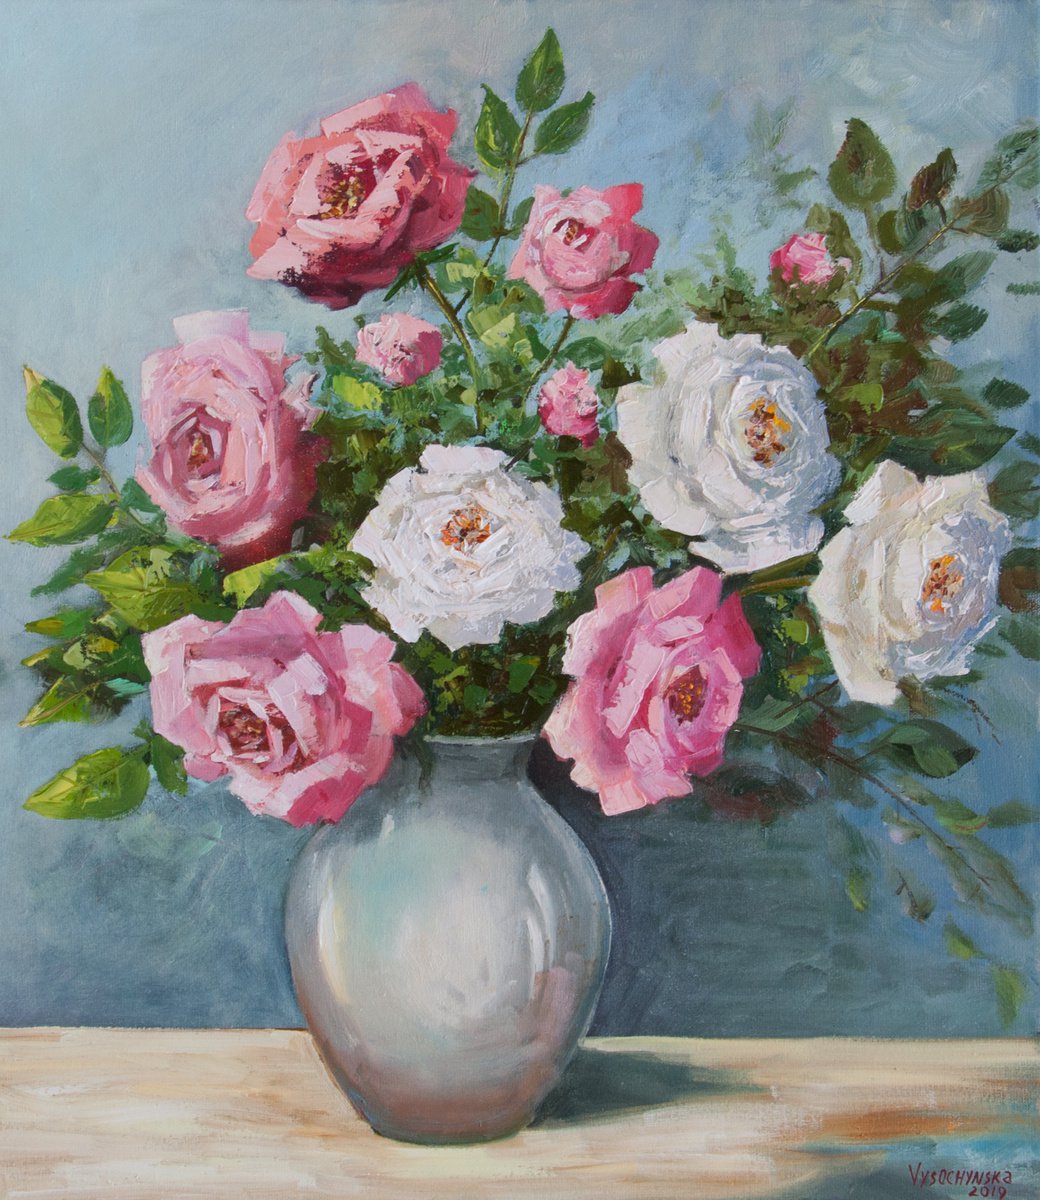 Roses. Oil painting. Floral still life. 14 x 16in. by Tetiana Vysochynska